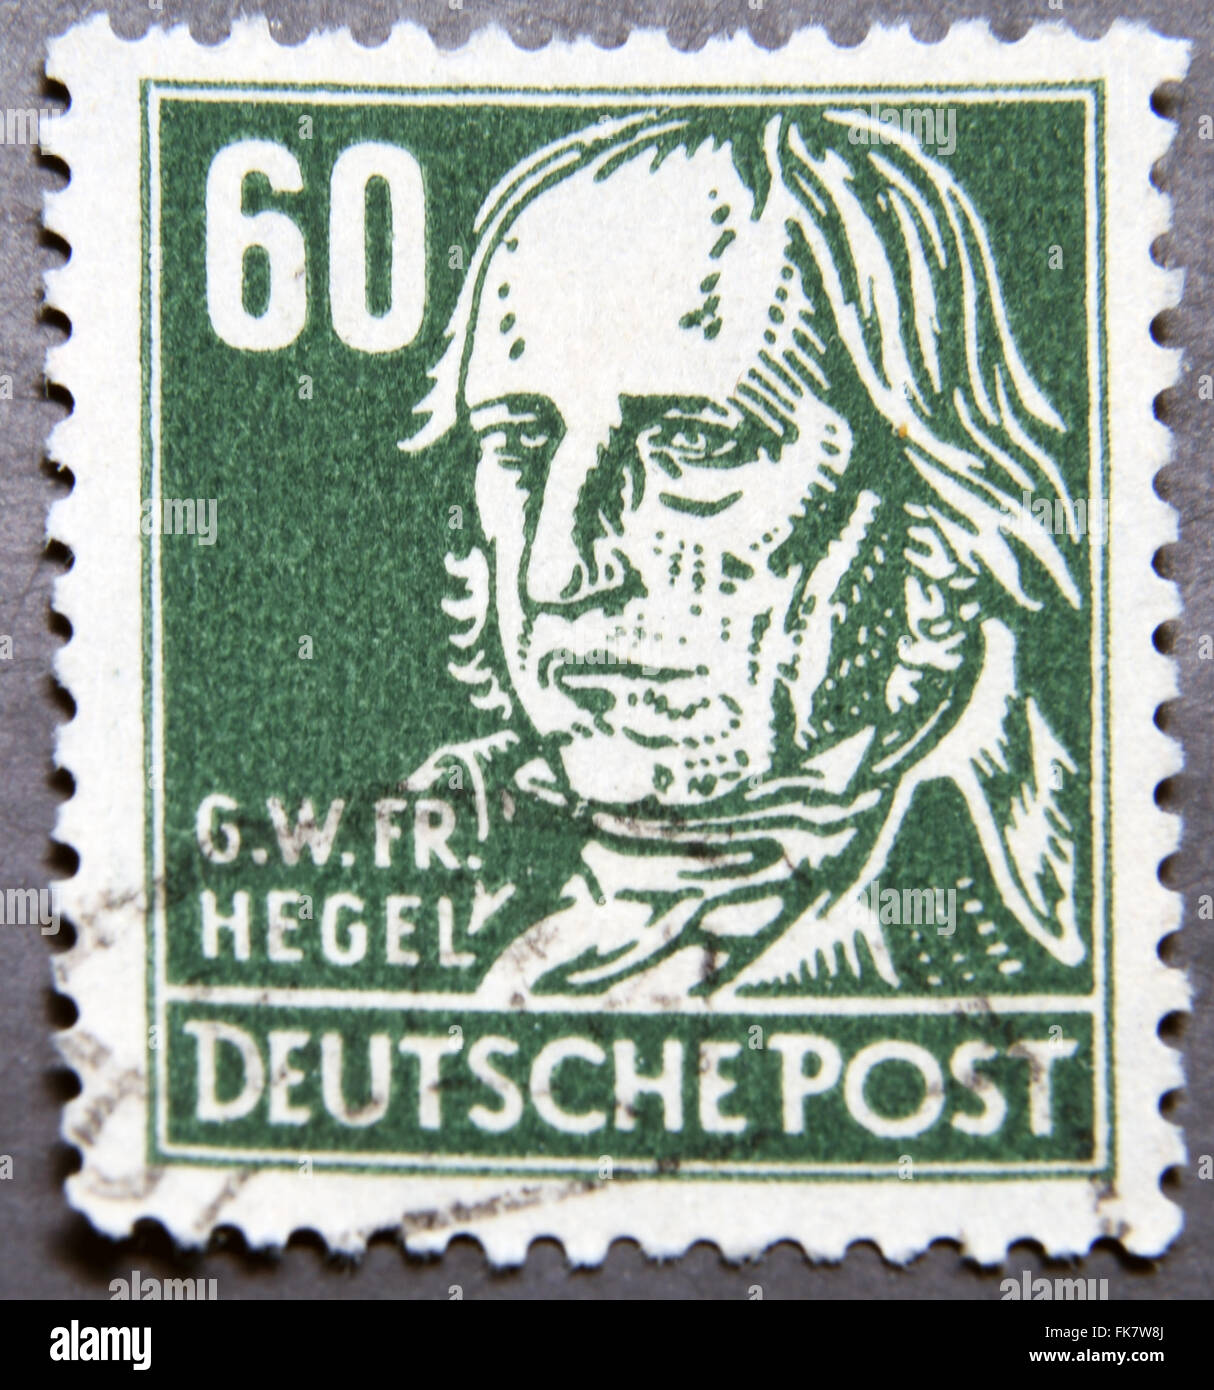 GERMANY - CIRCA 1952: Stamp printed in Germany shows portrait of Georg Wilhelm Friedrich Hegel, circa 1952 Stock Photo